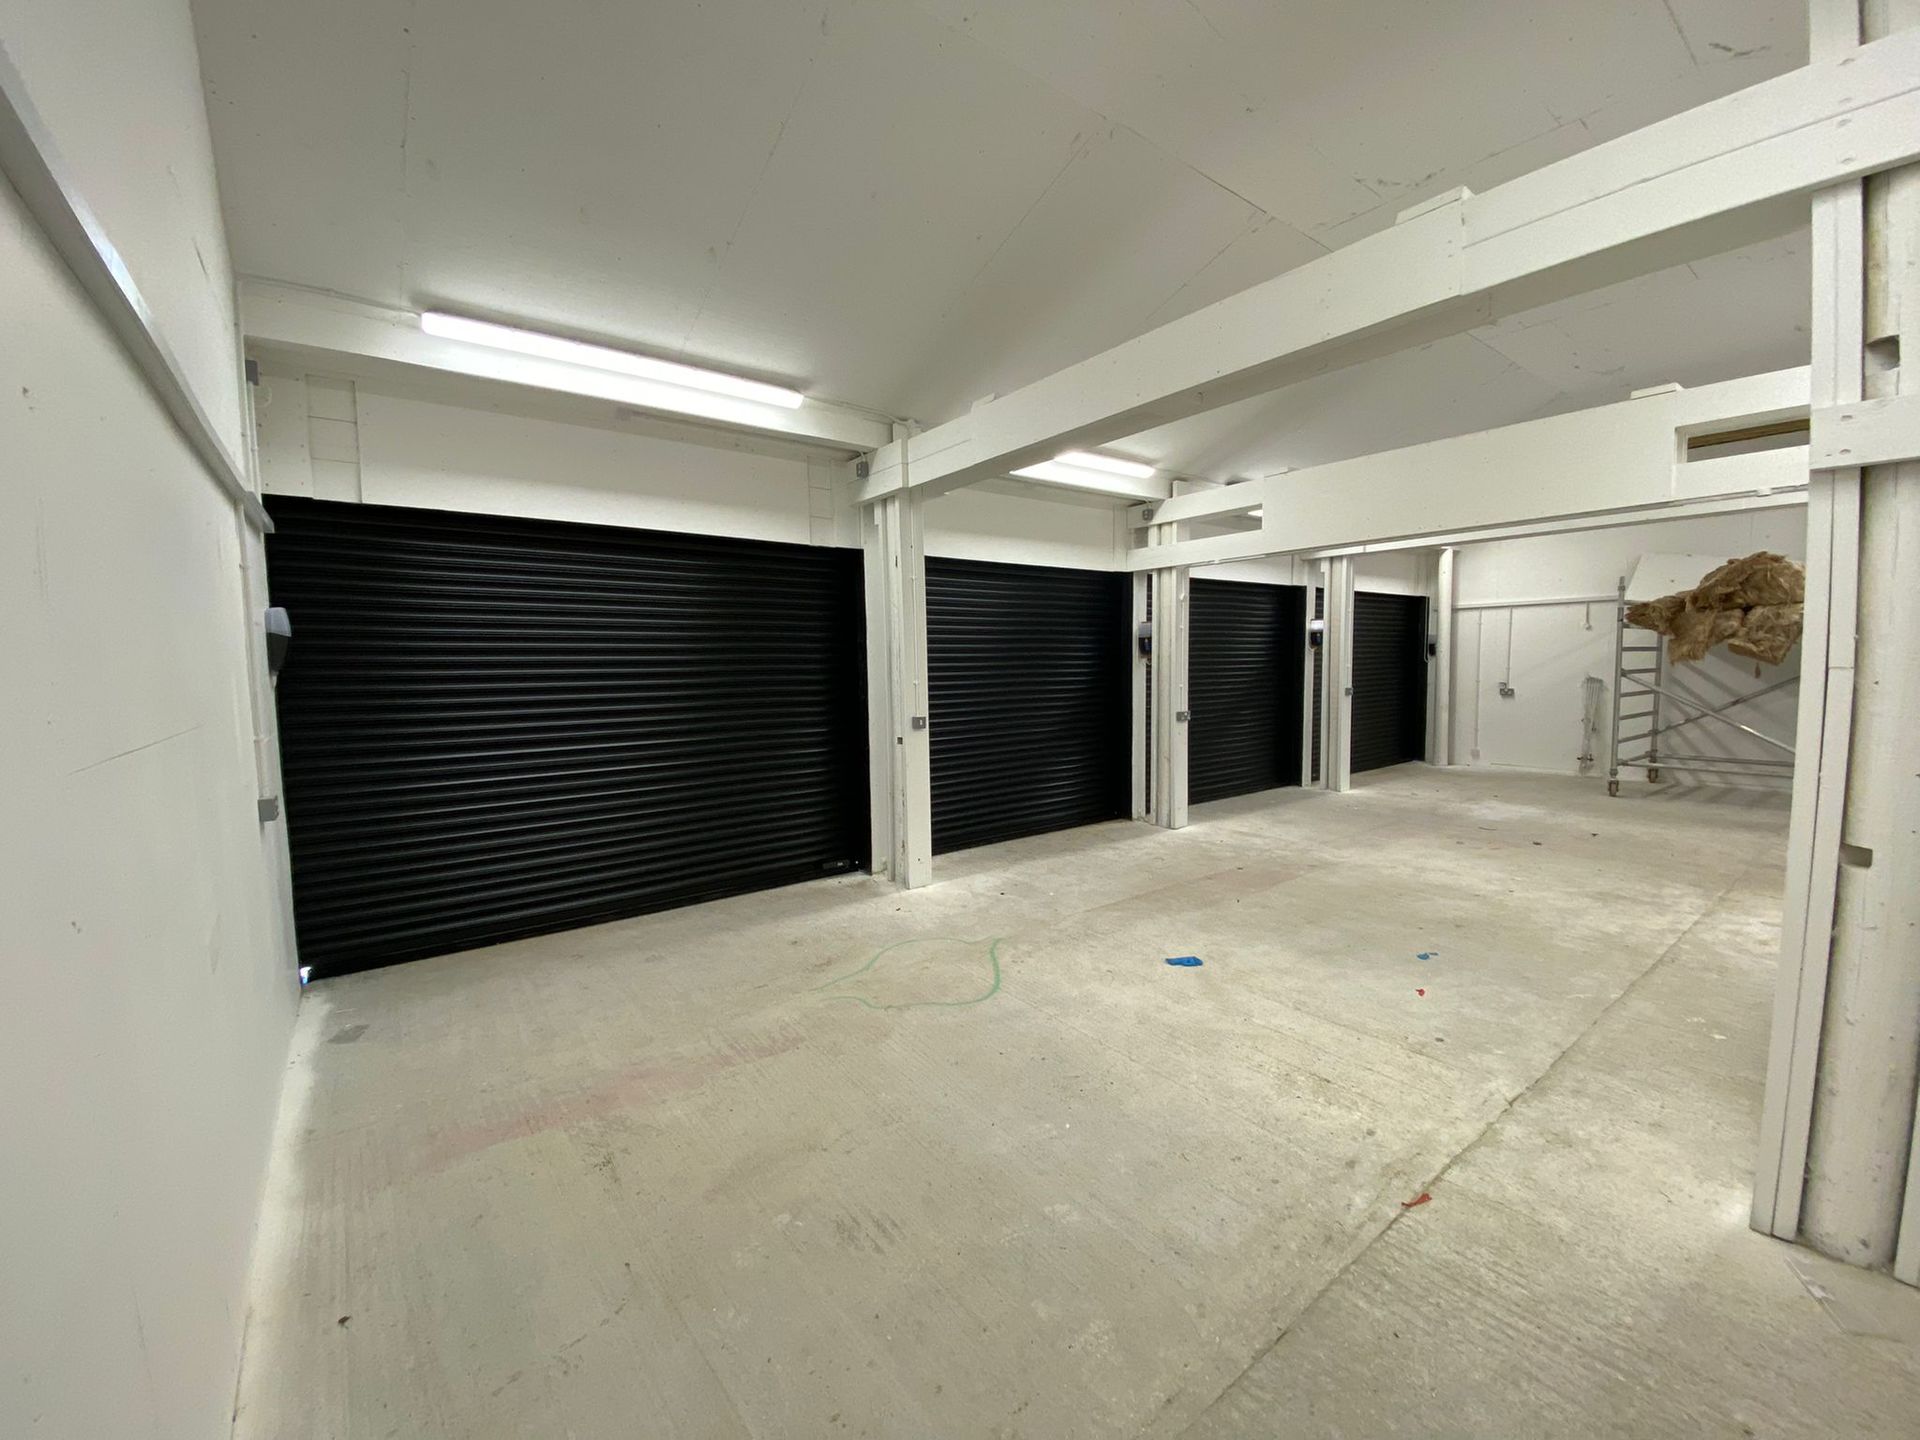 New warehouse roller shutters